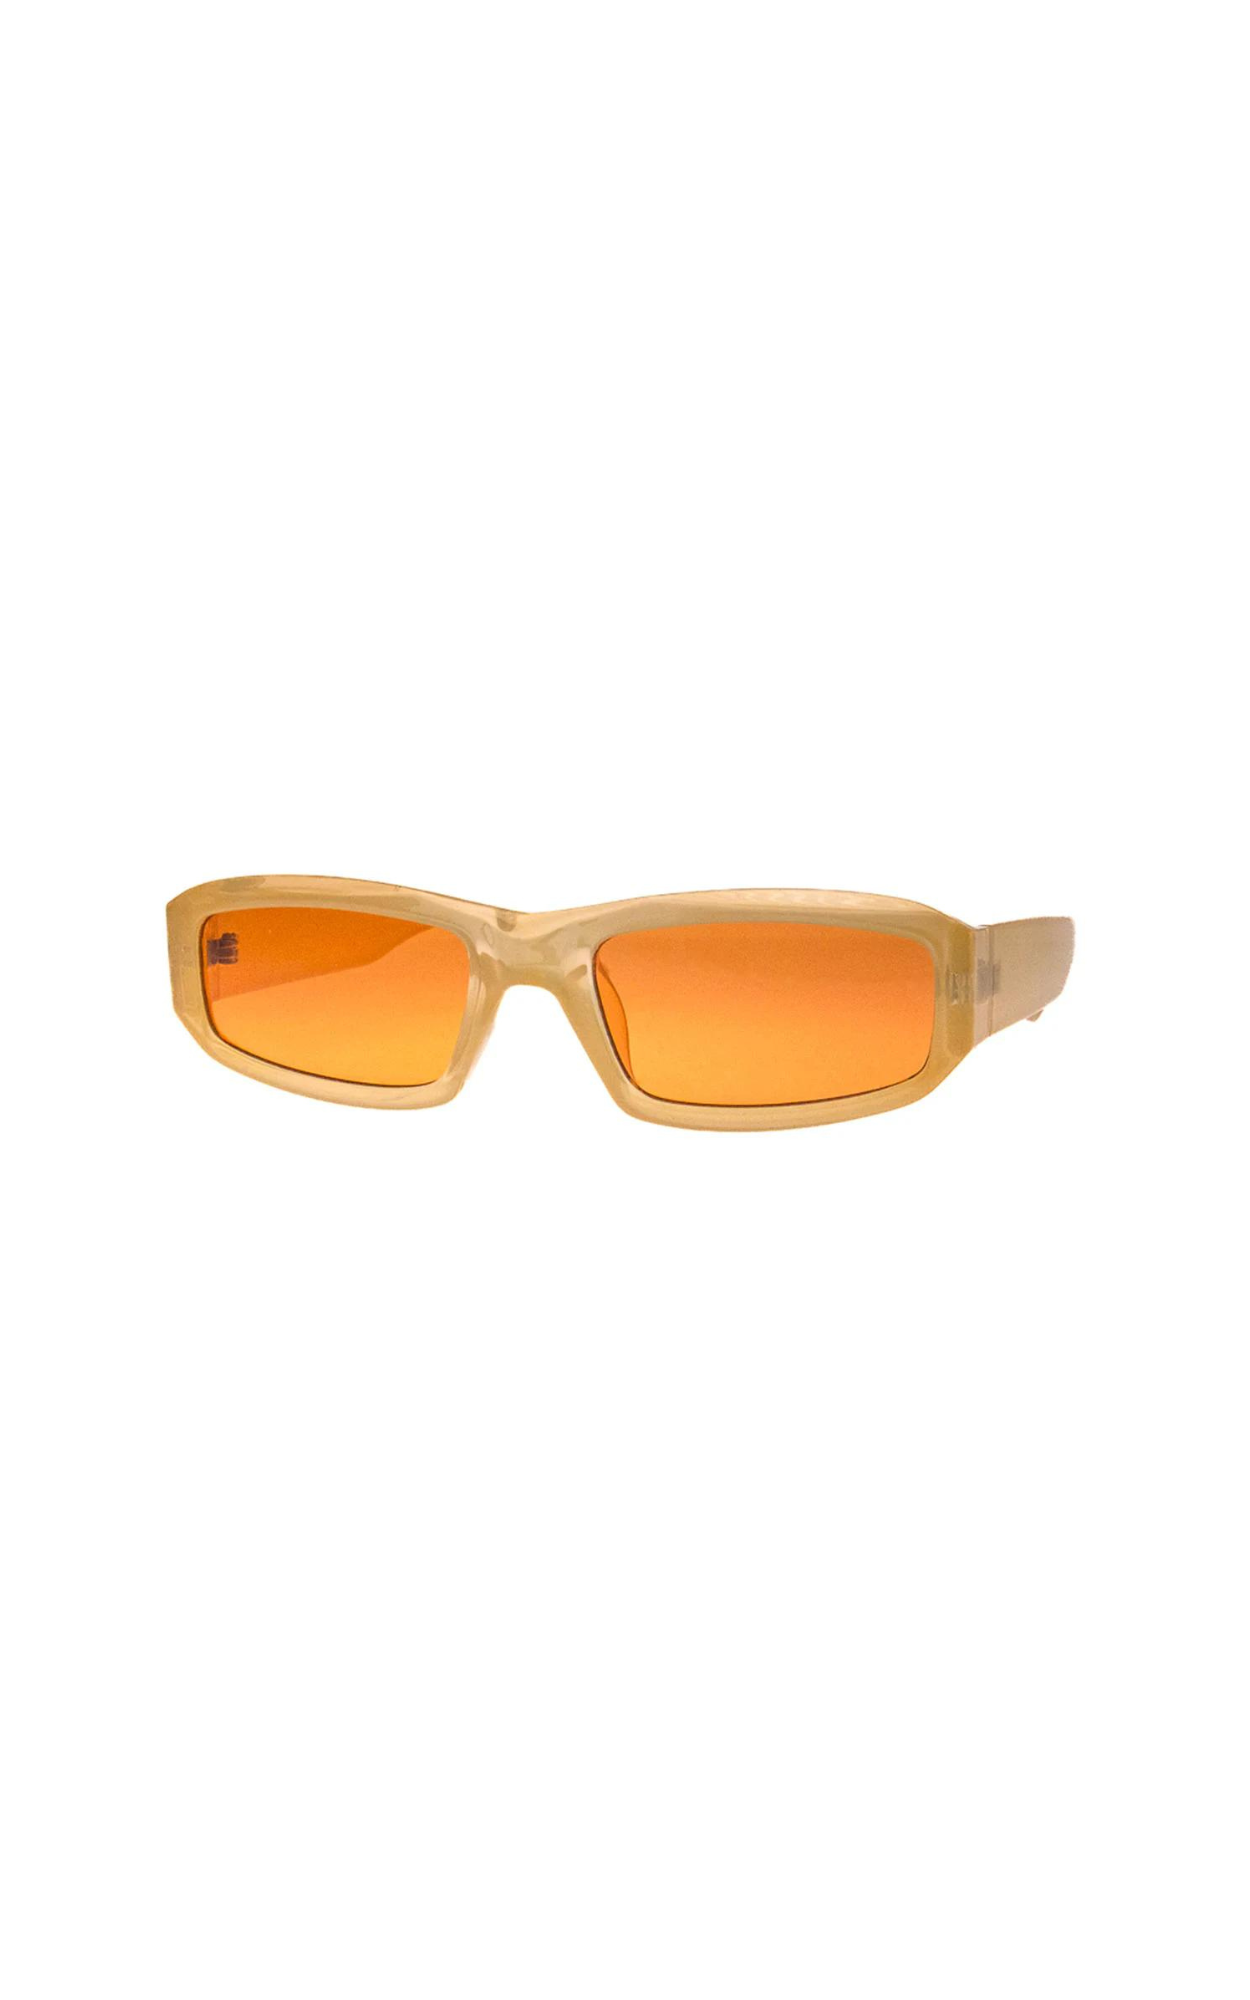 Cava Sunglasses - Proper